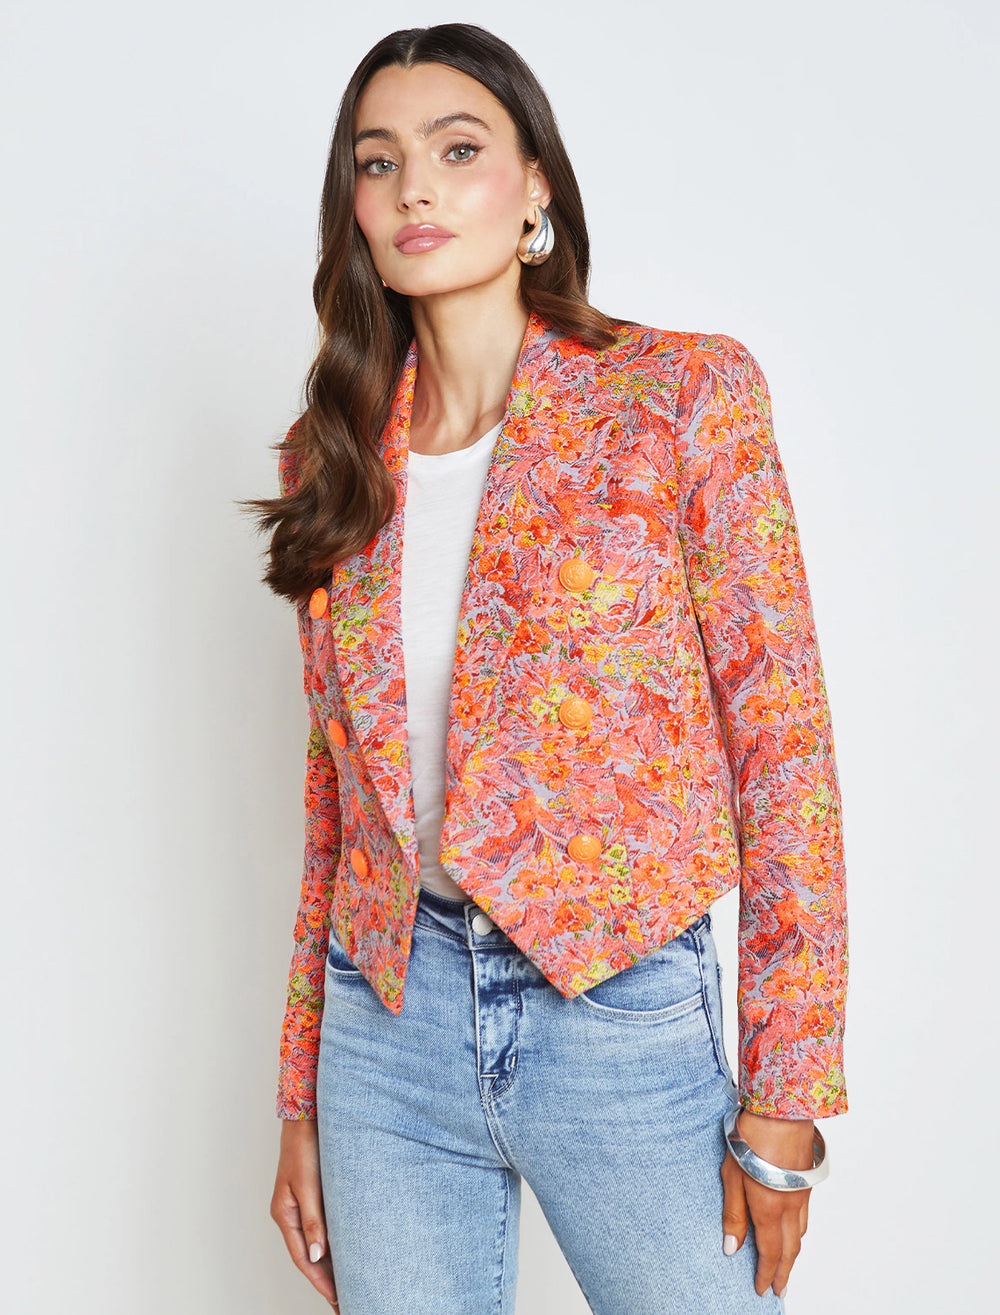 Model wearing L'agence's lila boxy blazer in orange floral.